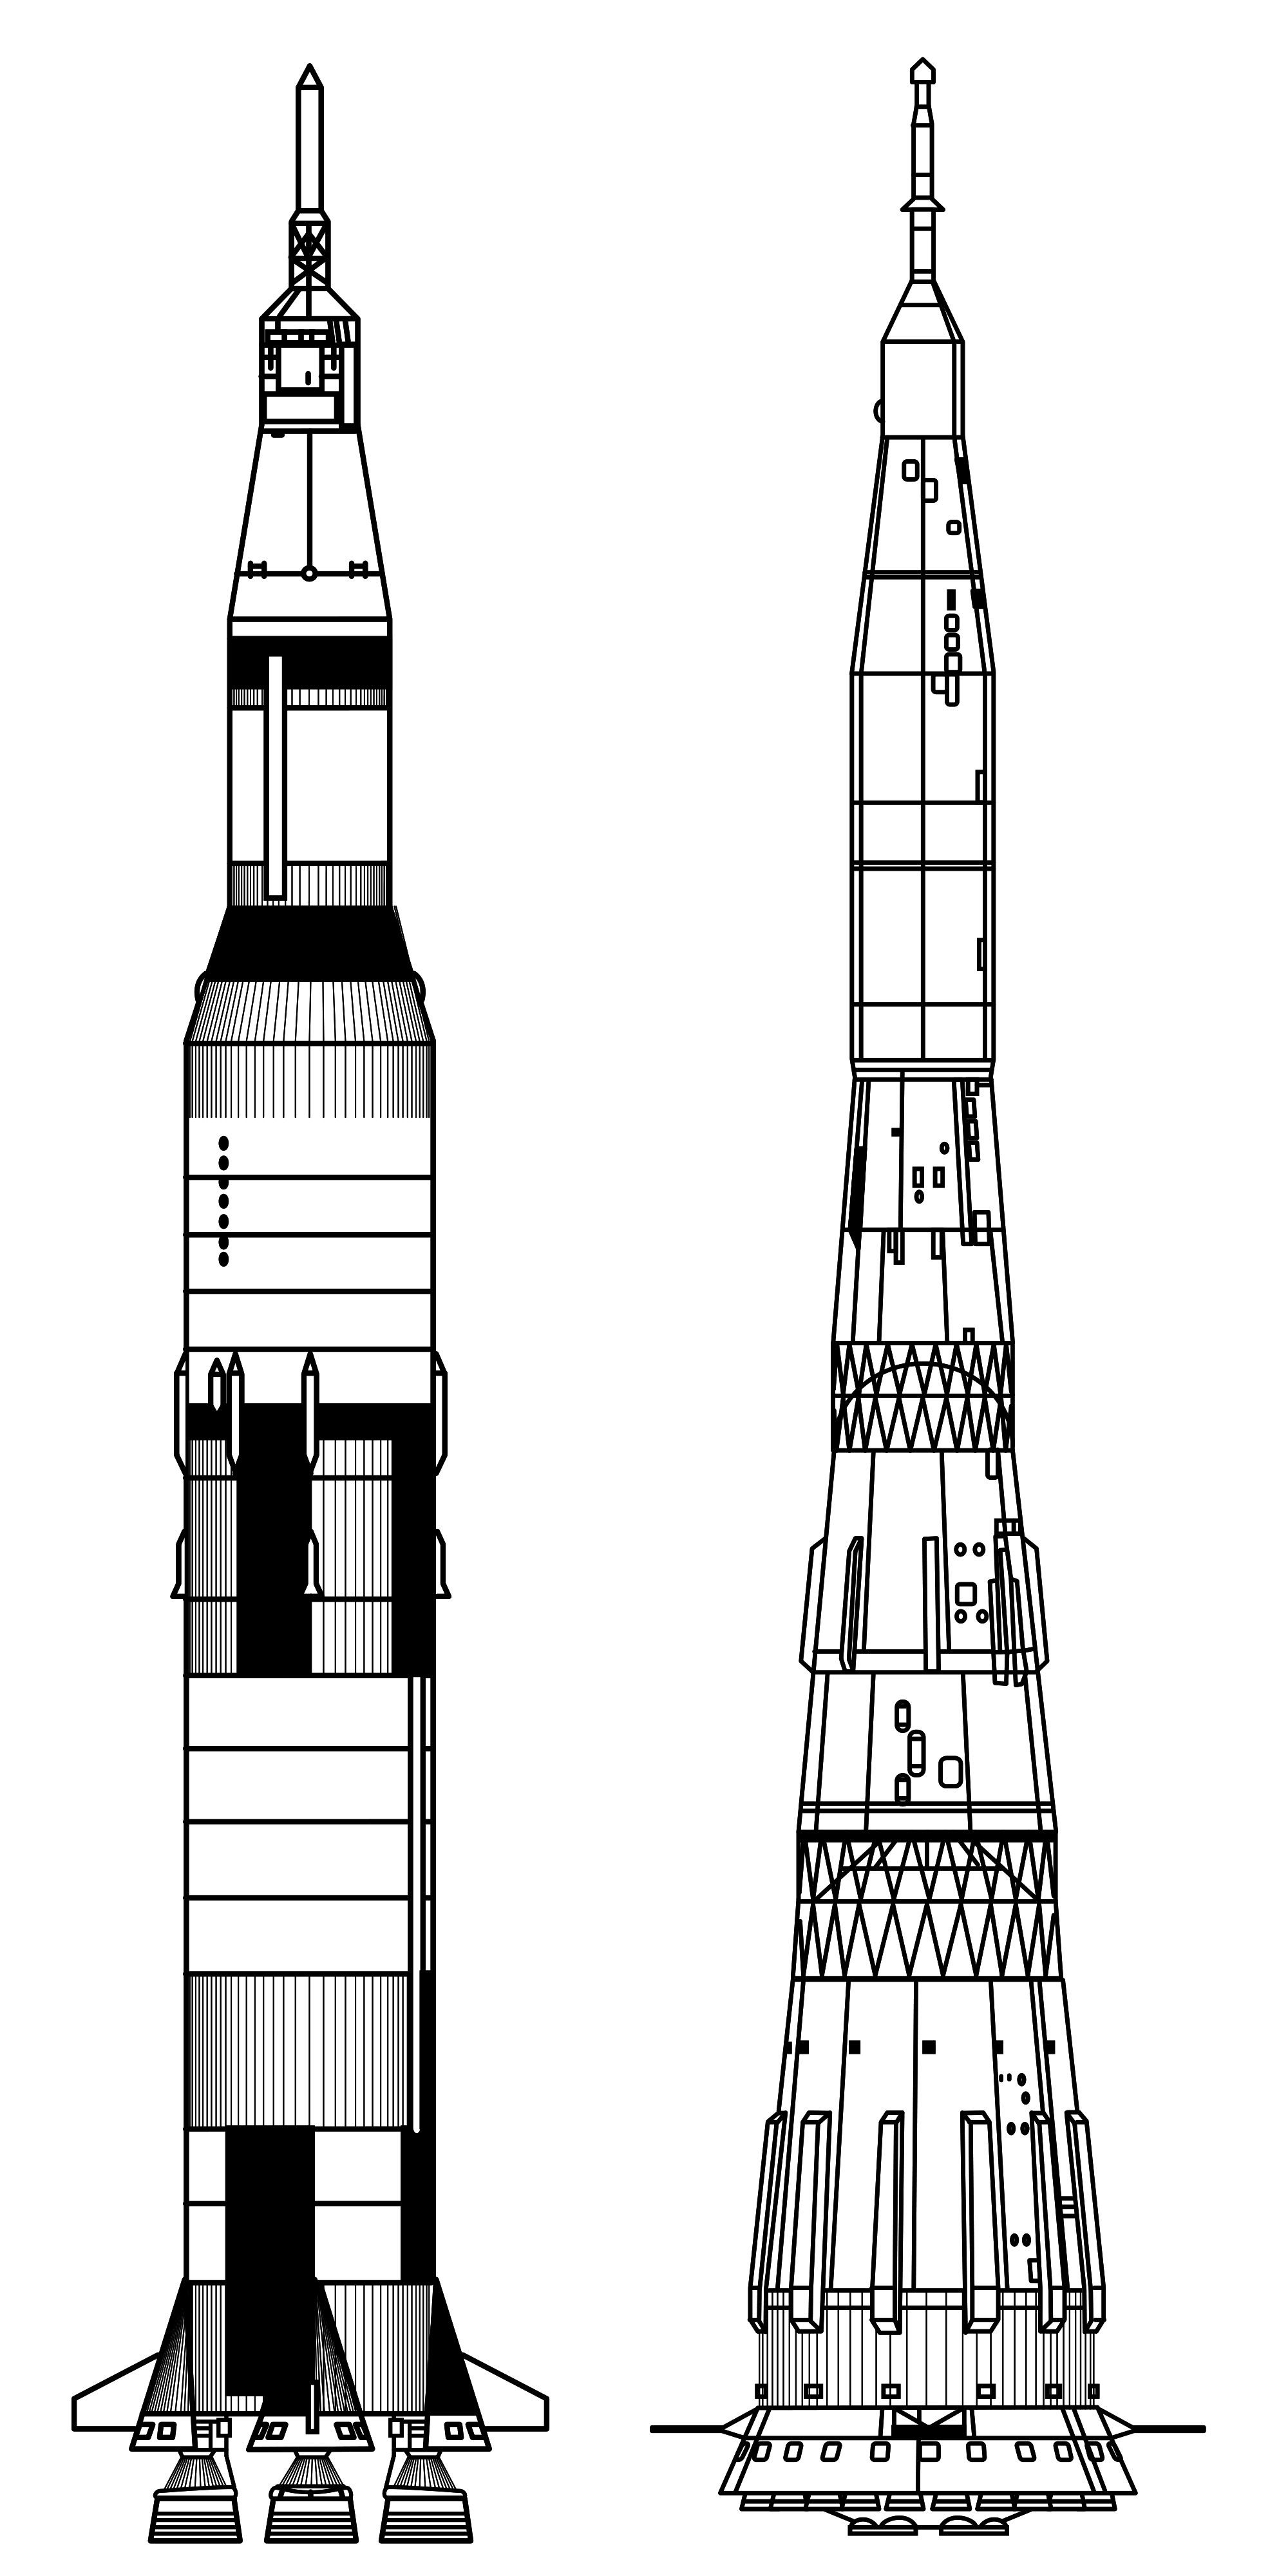 Spaceship clipart apollo spacecraft. Images of rocket drawn